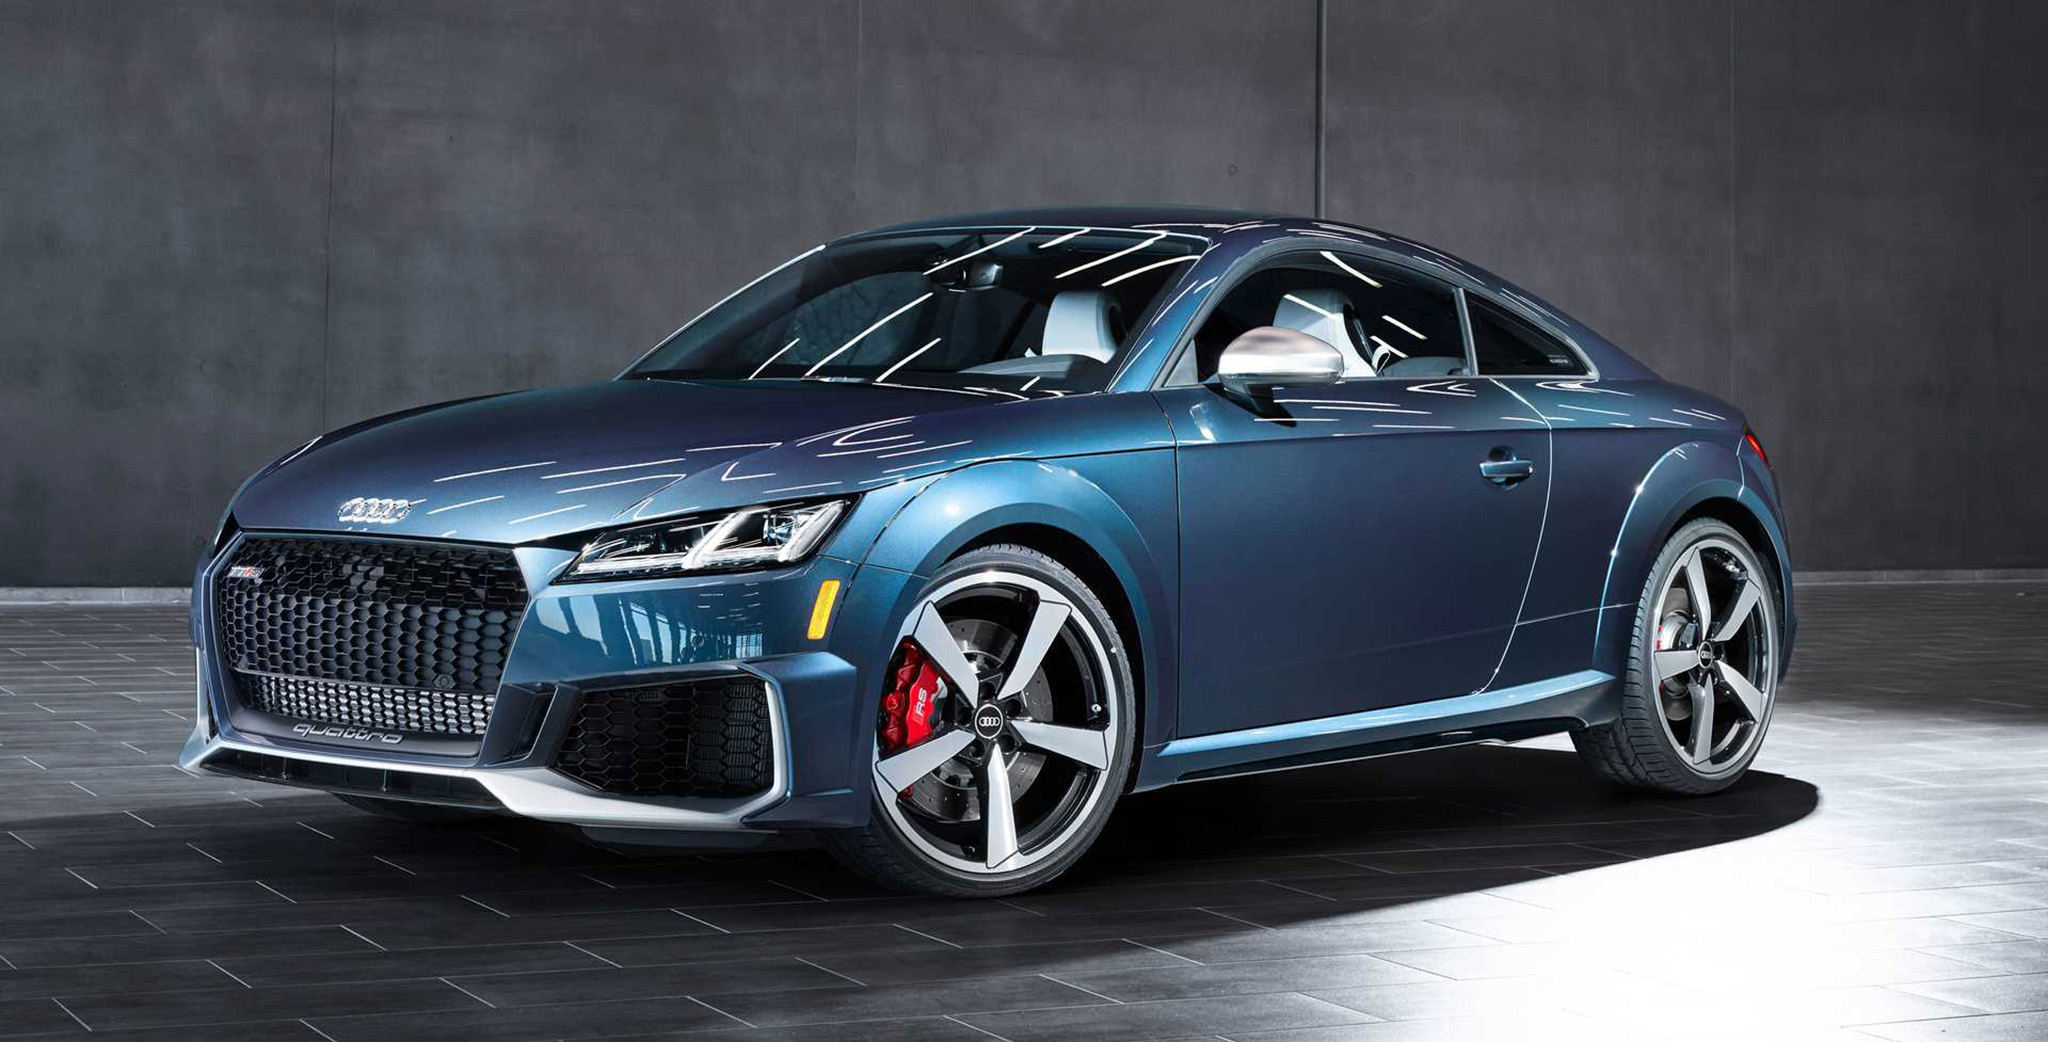 Audi TT RS 2022 ra mắt, thêm bản đặc biệt giá từ 74.245 USD 2022-audi-tt-rs-heritage-edition-helios-blue-metallic-diamond-silver-leather-and-ocean-blue-stitch.jpeg